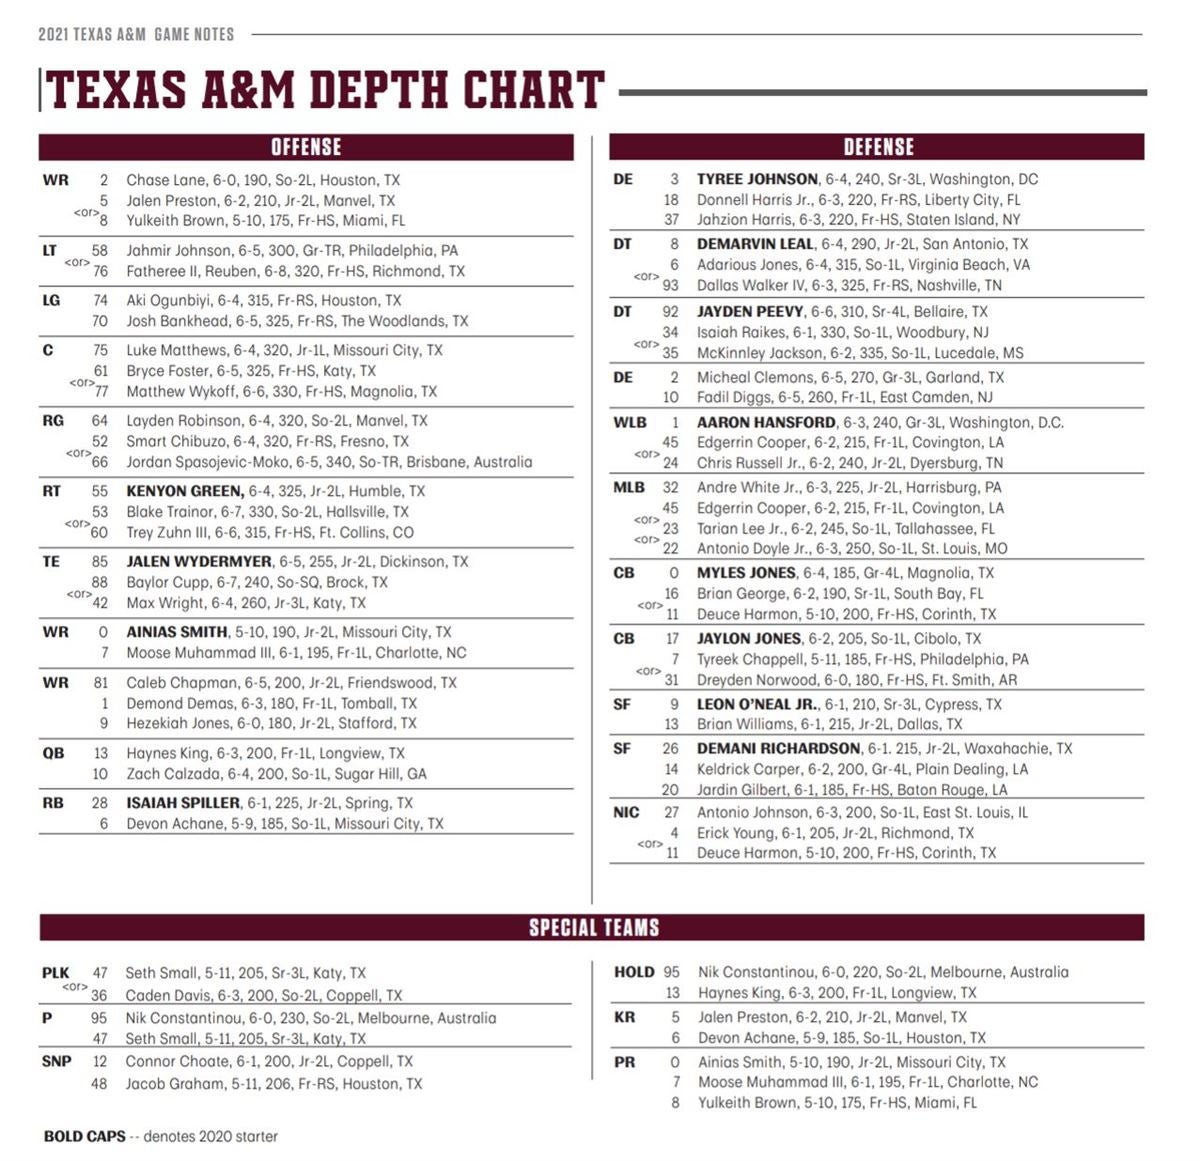 Texas A&M releases 2021 depth chart ahead of season opener